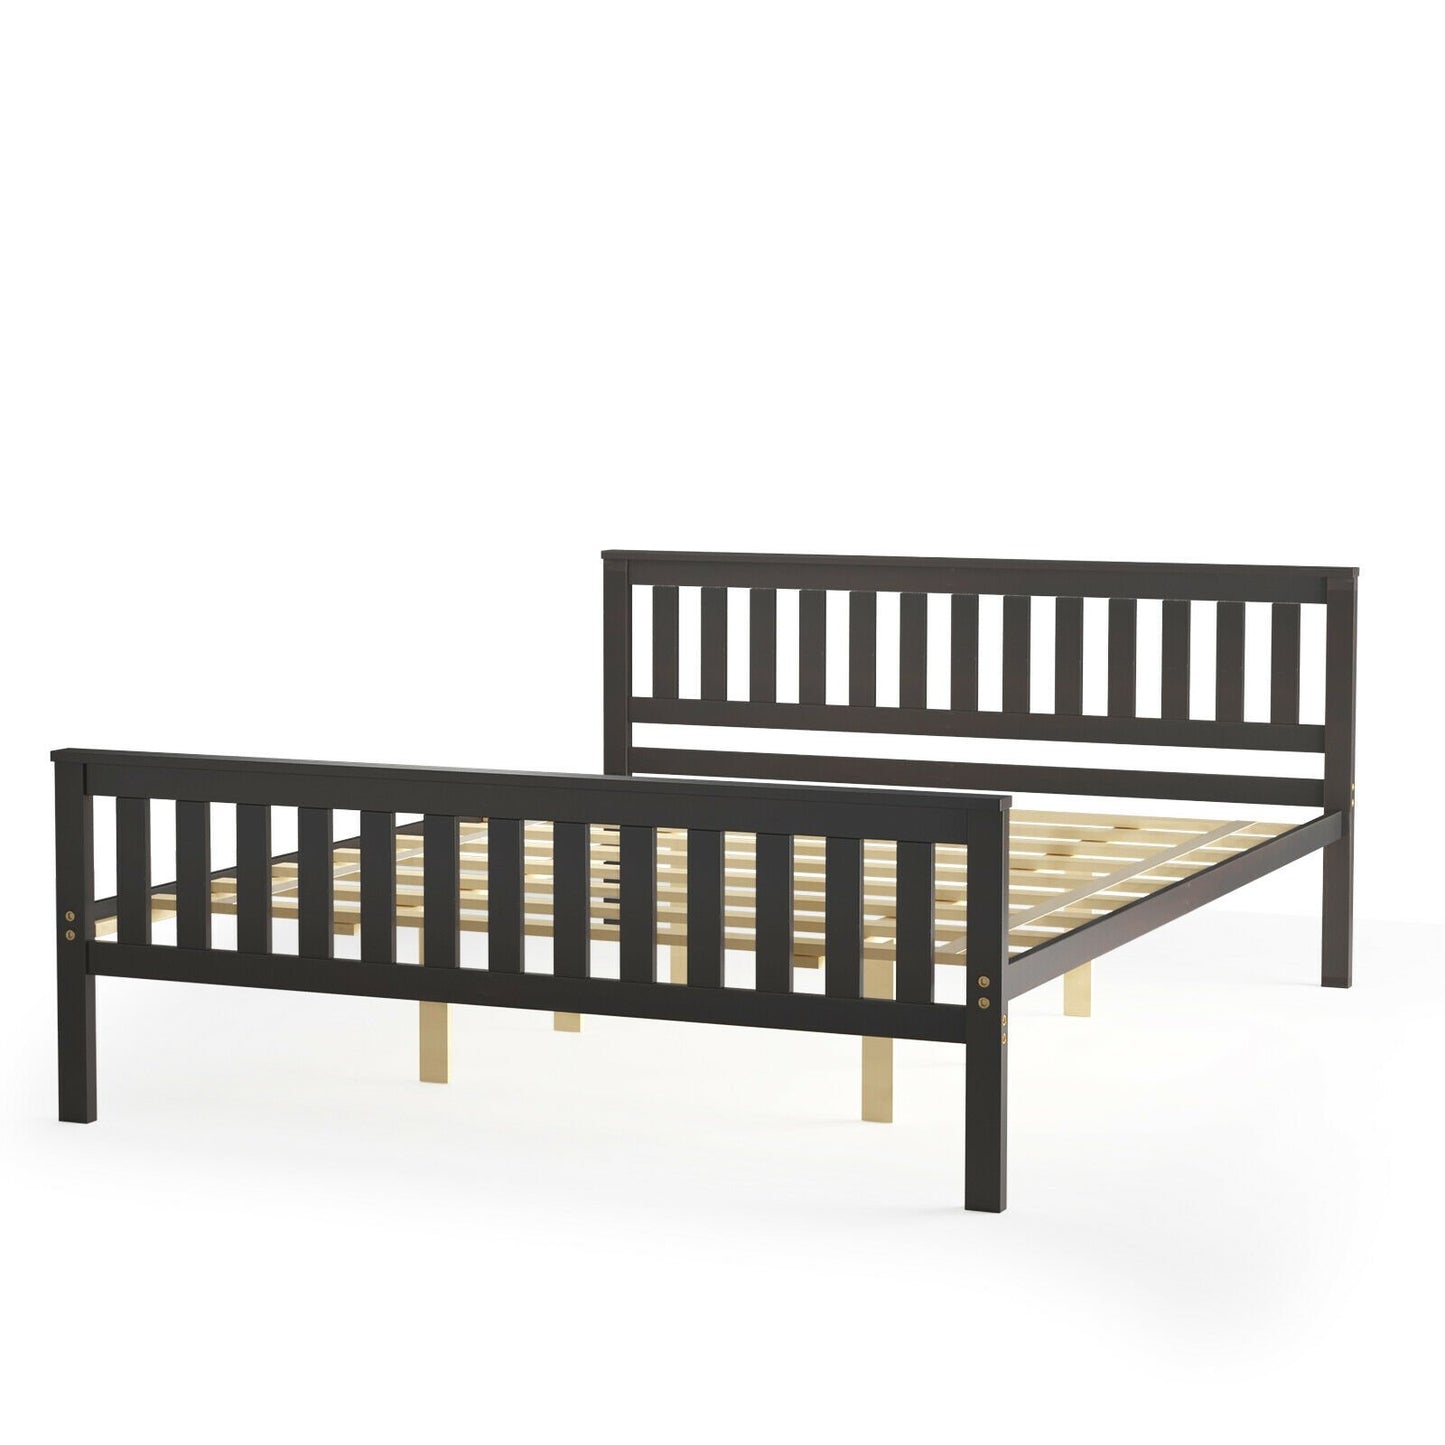 Queen Wood Platform Bed with Headboard, Espresso - Gallery Canada